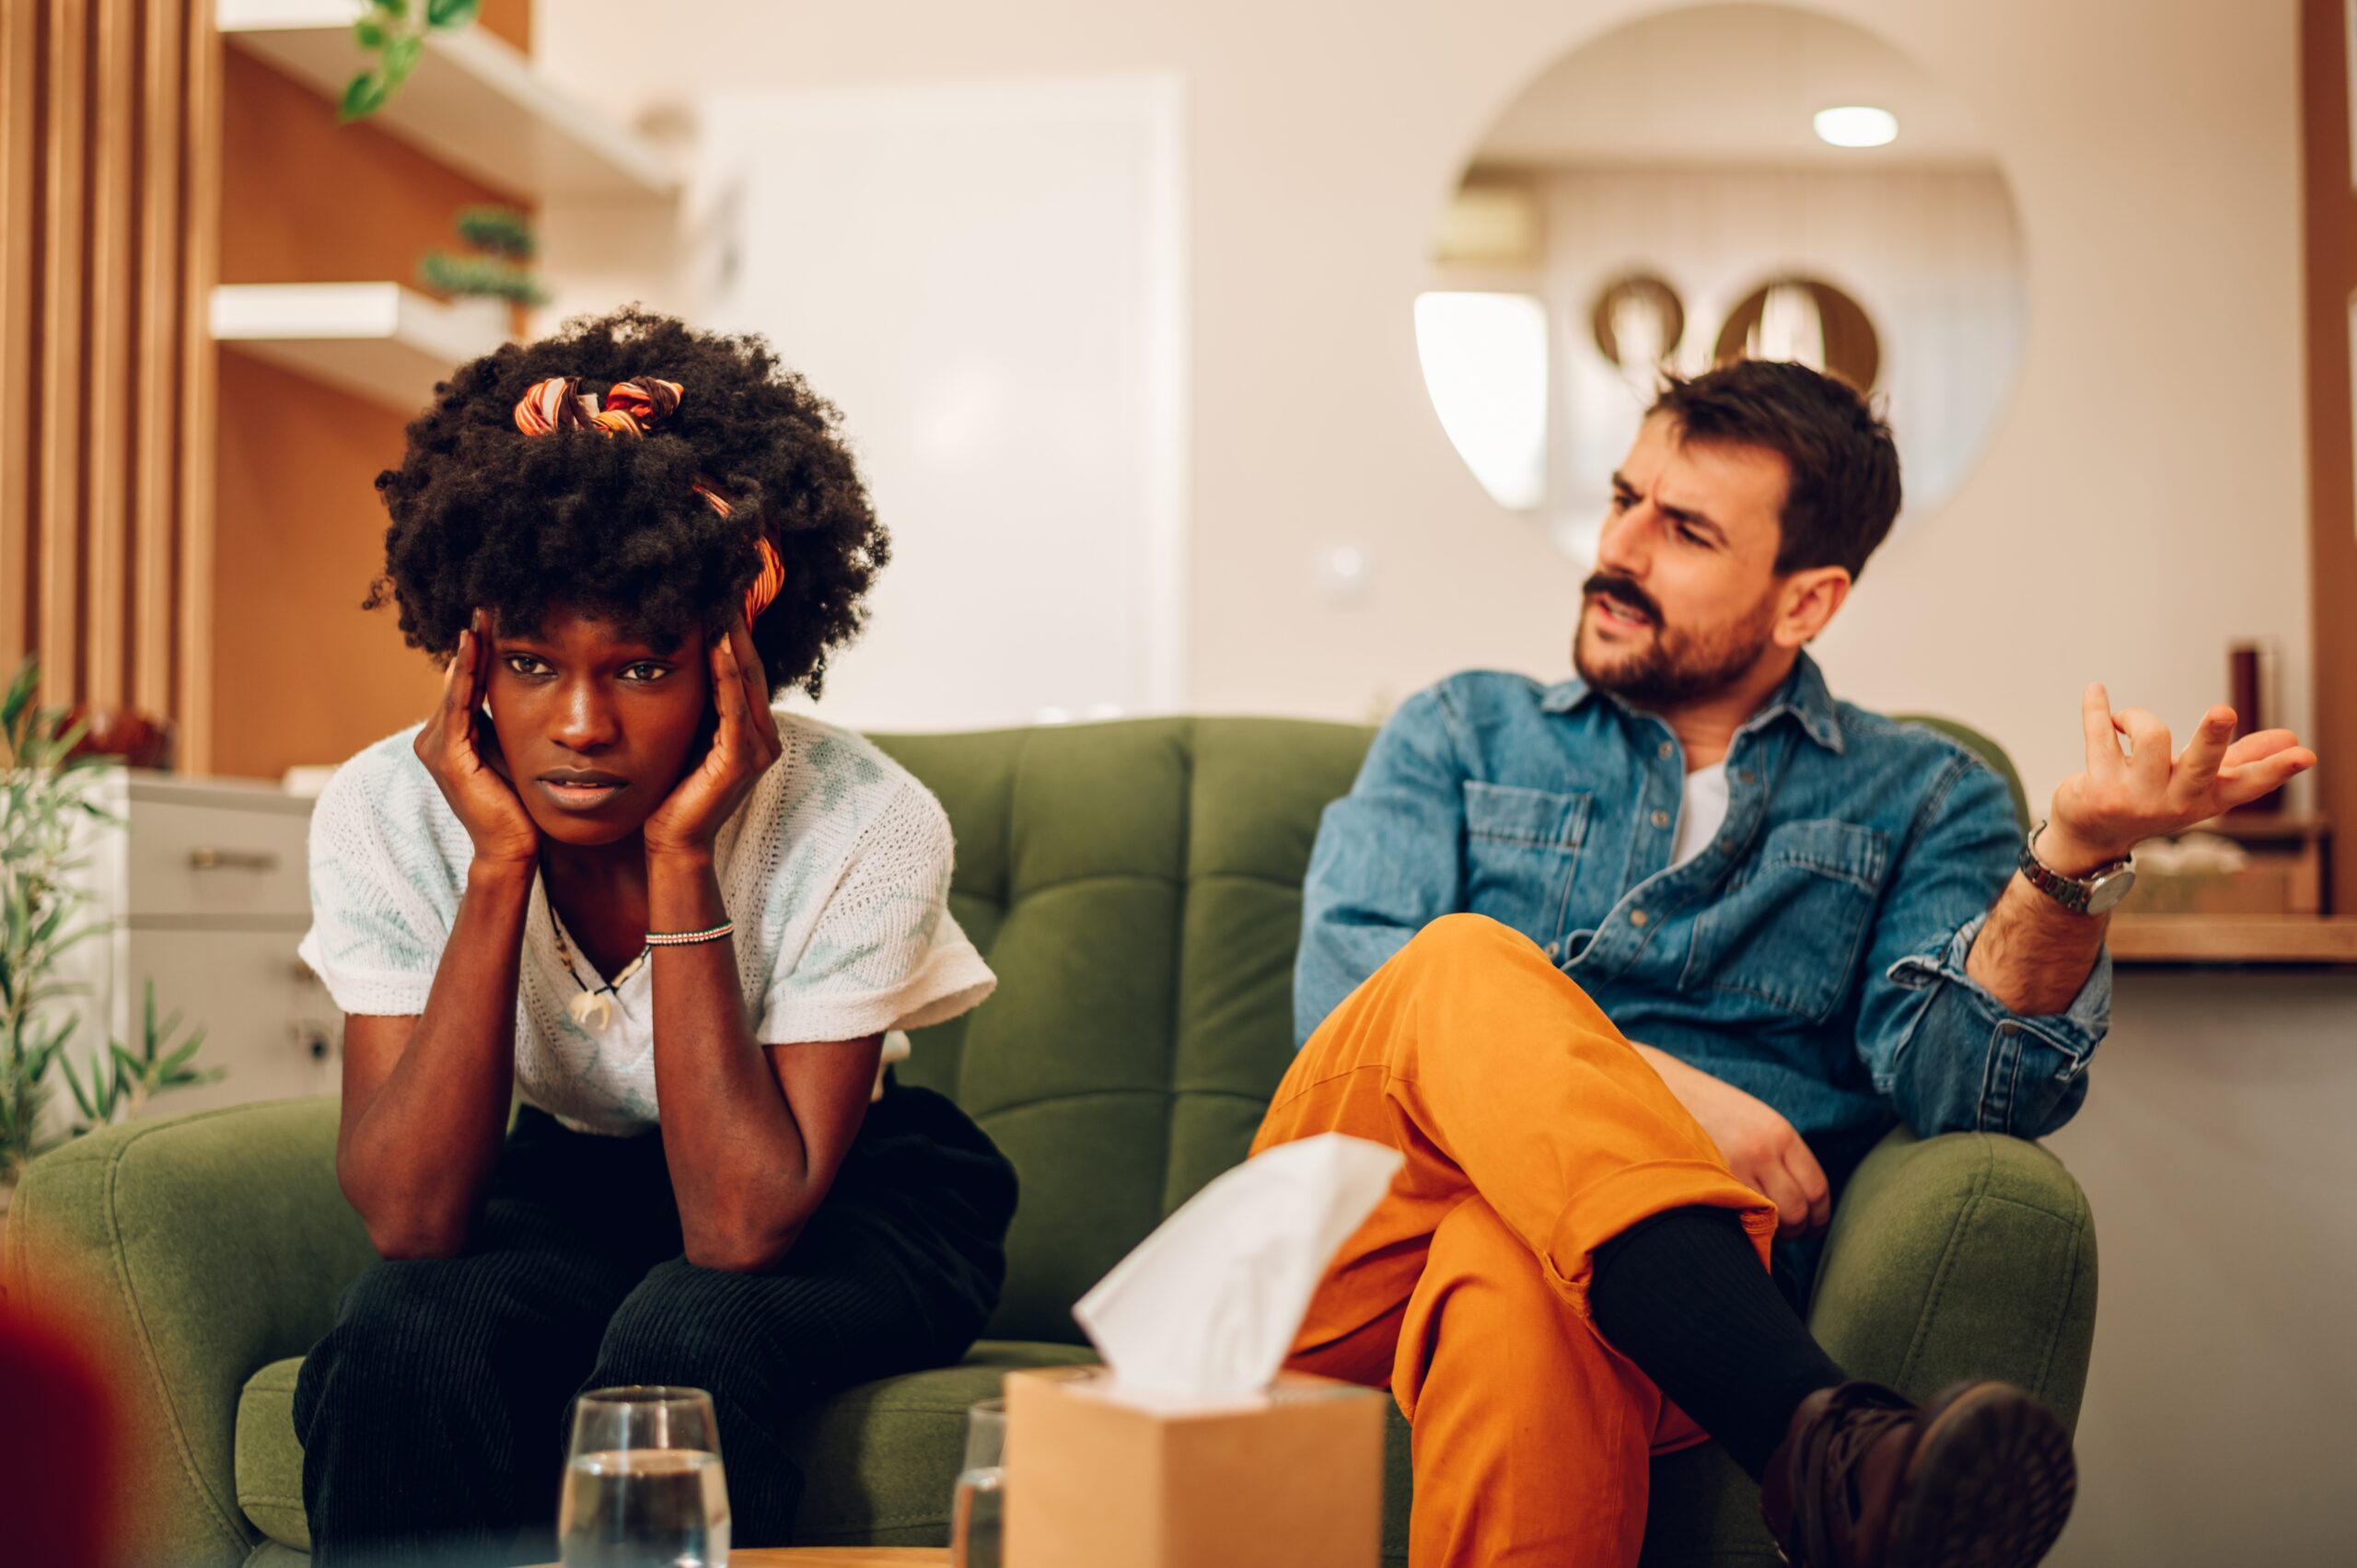 A mixed-race couple arguing | Source: Shutterstock